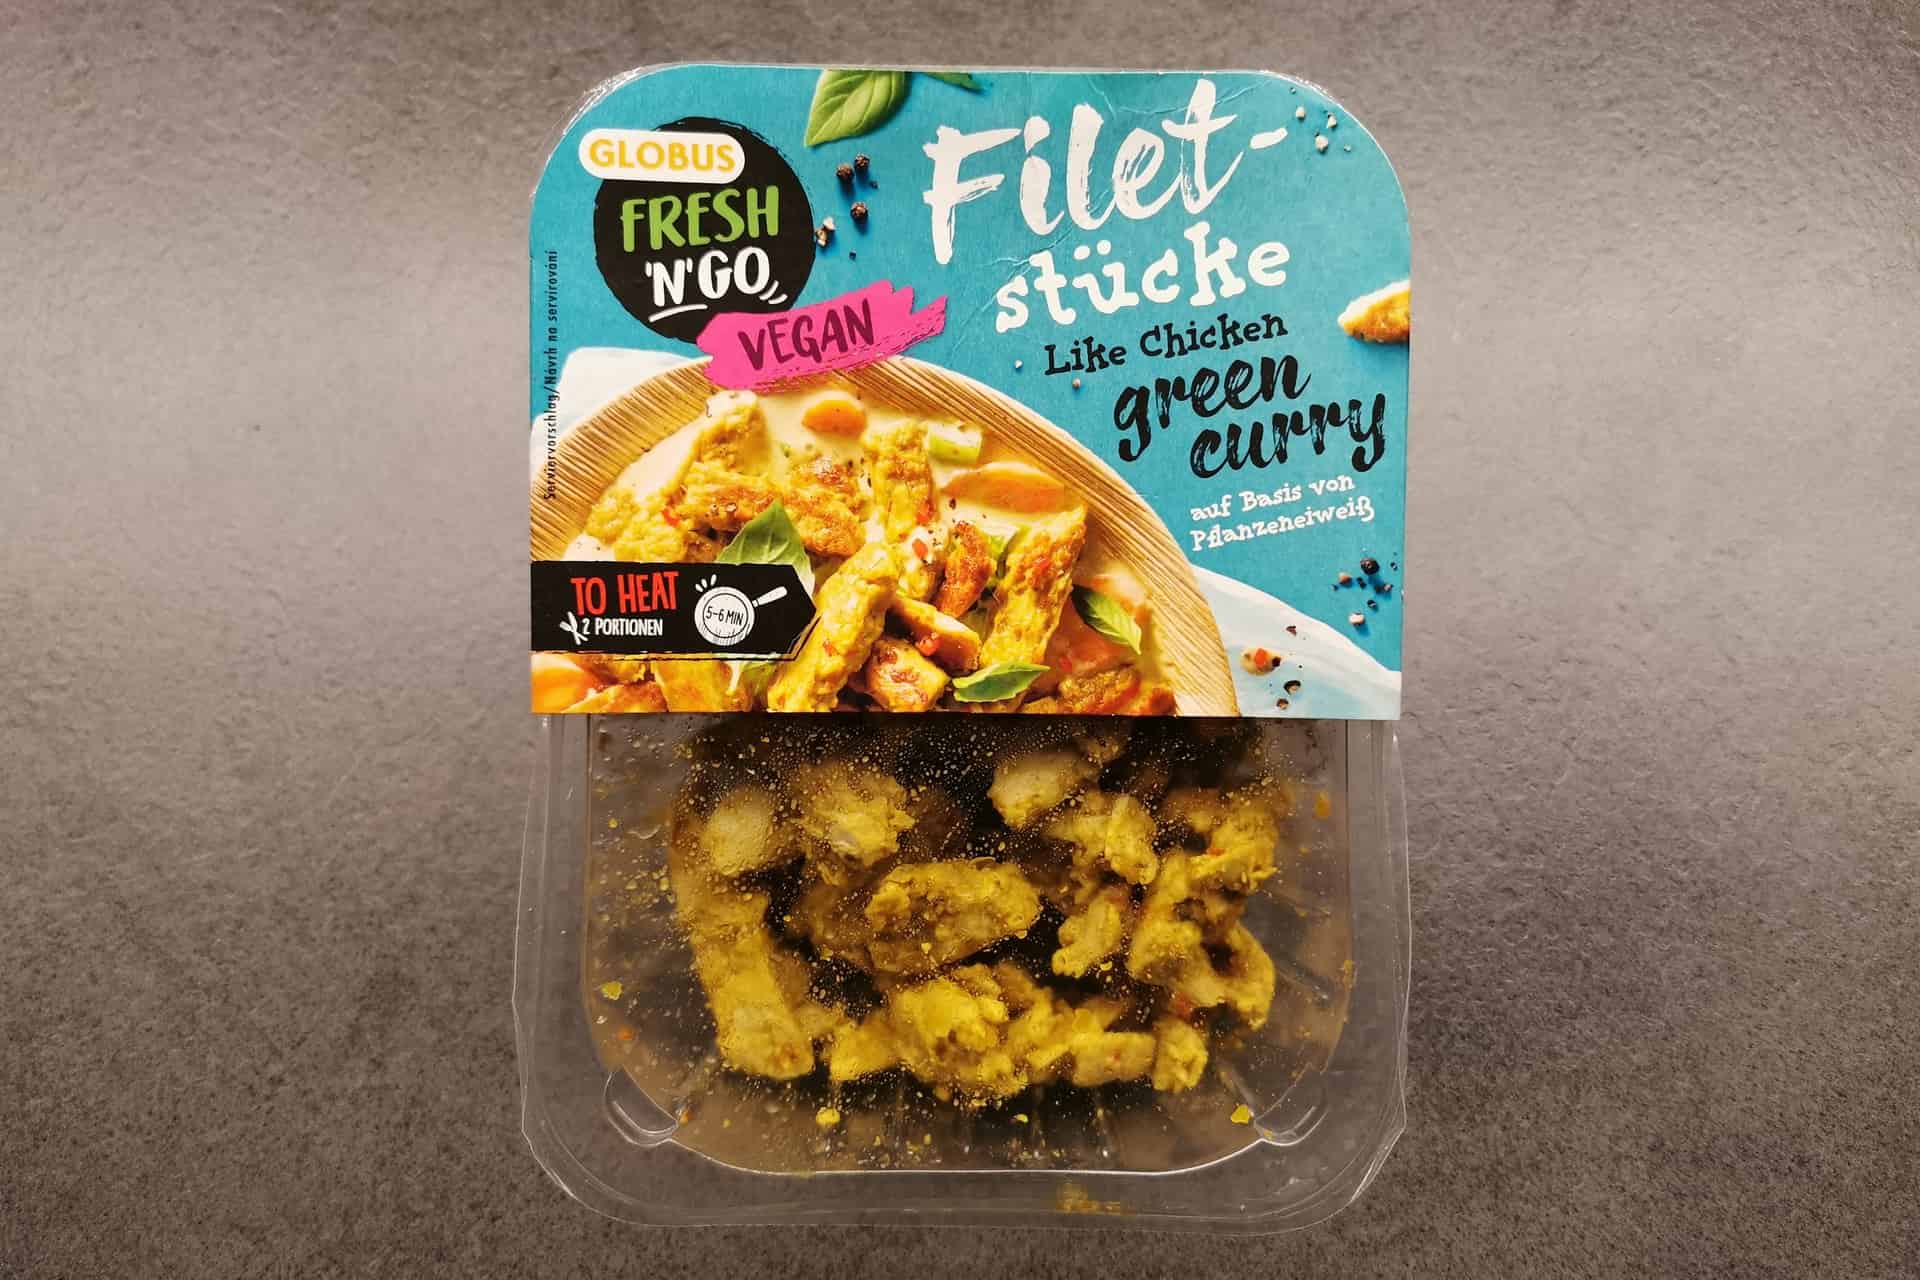 Globus Fresh 'n' go: Vegane Filetstücke like Chicken green Curry 